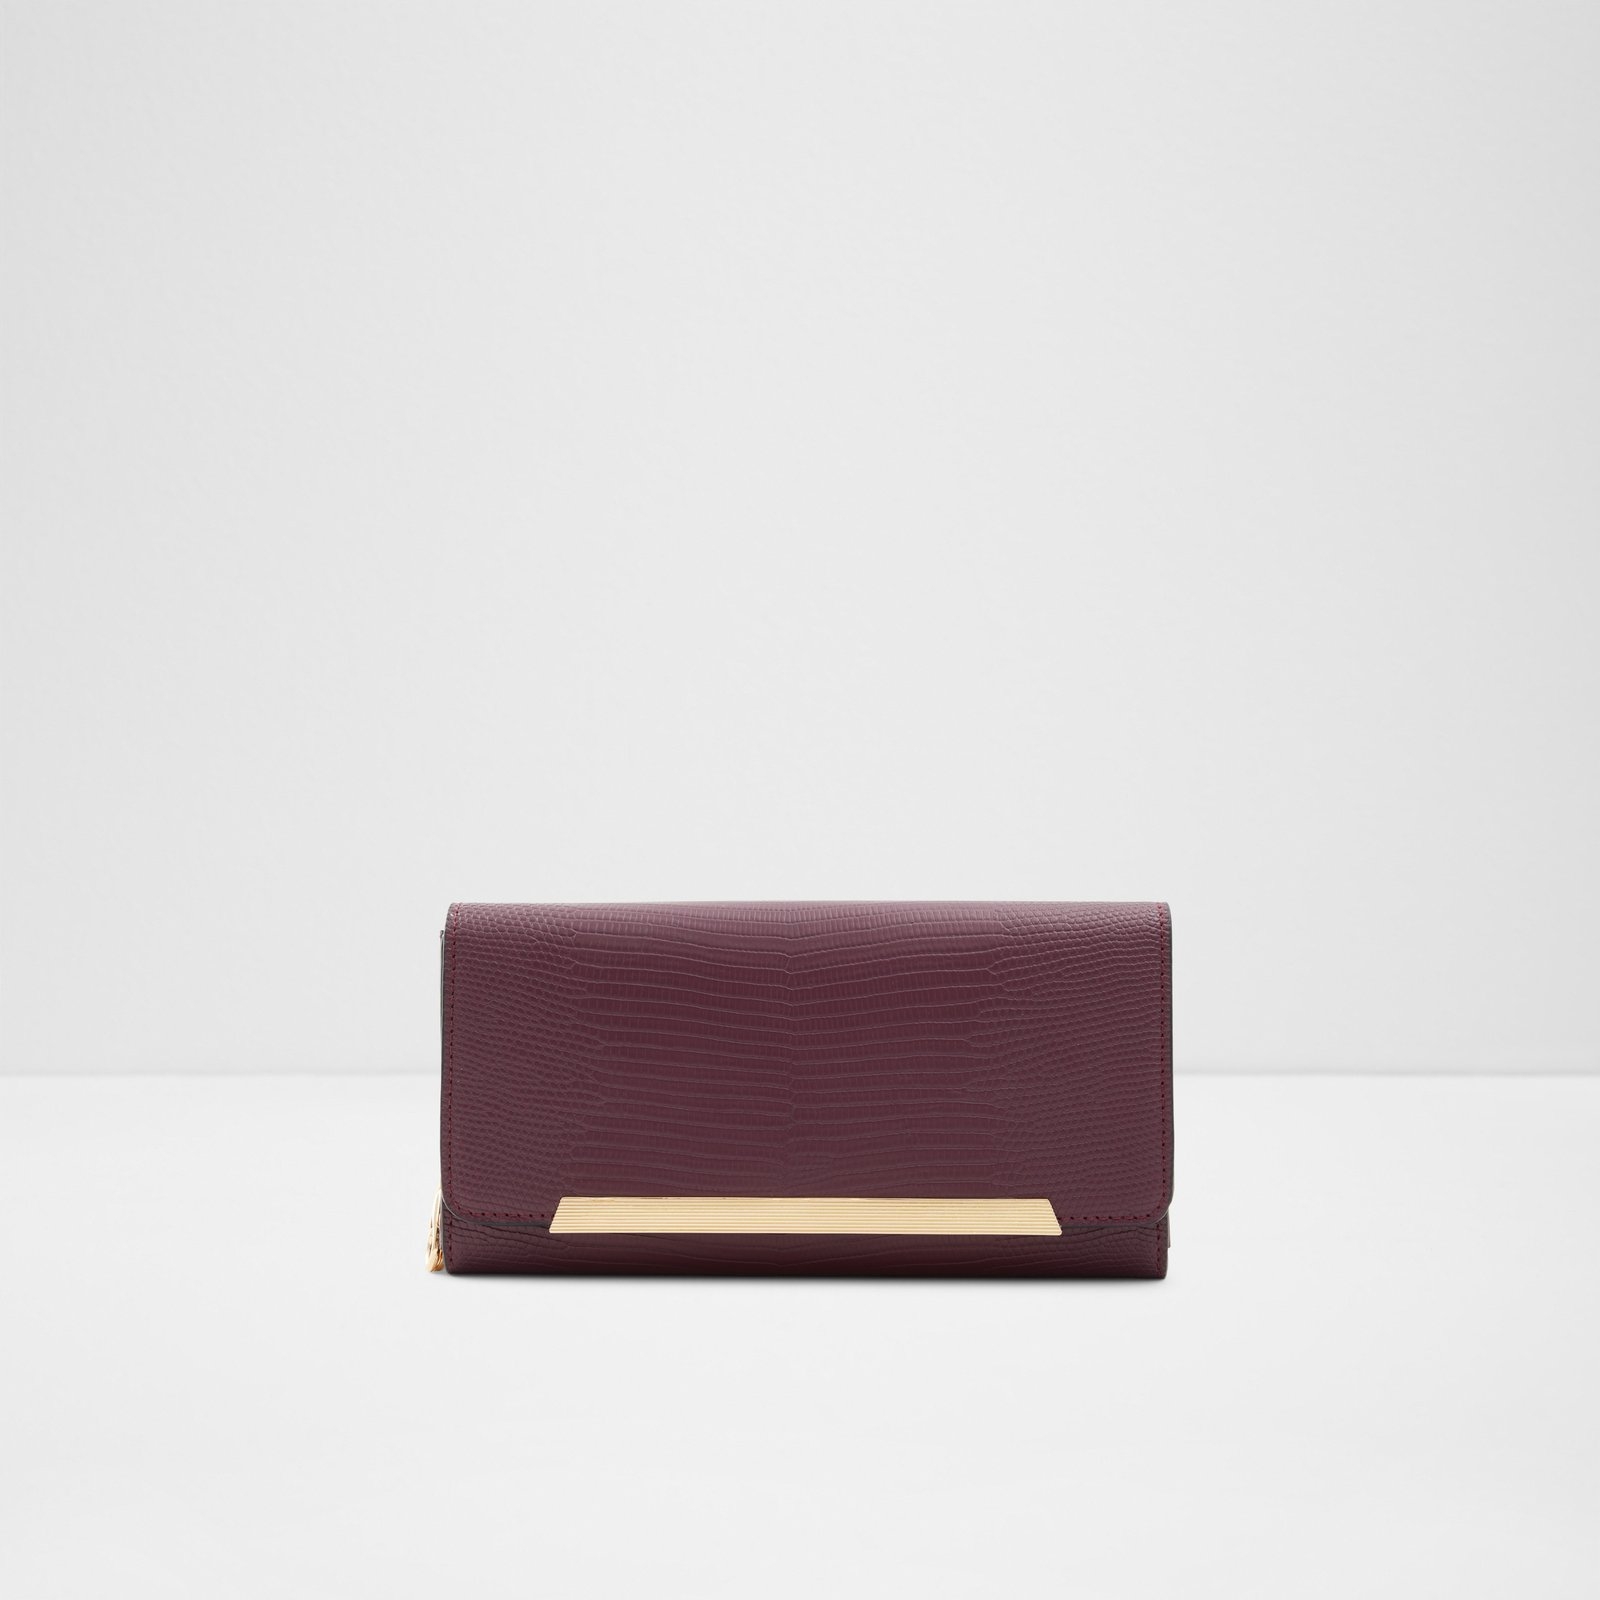 Louis Vuitton wallet - متجر النخبة تقليد ماركات ماستر كوبي